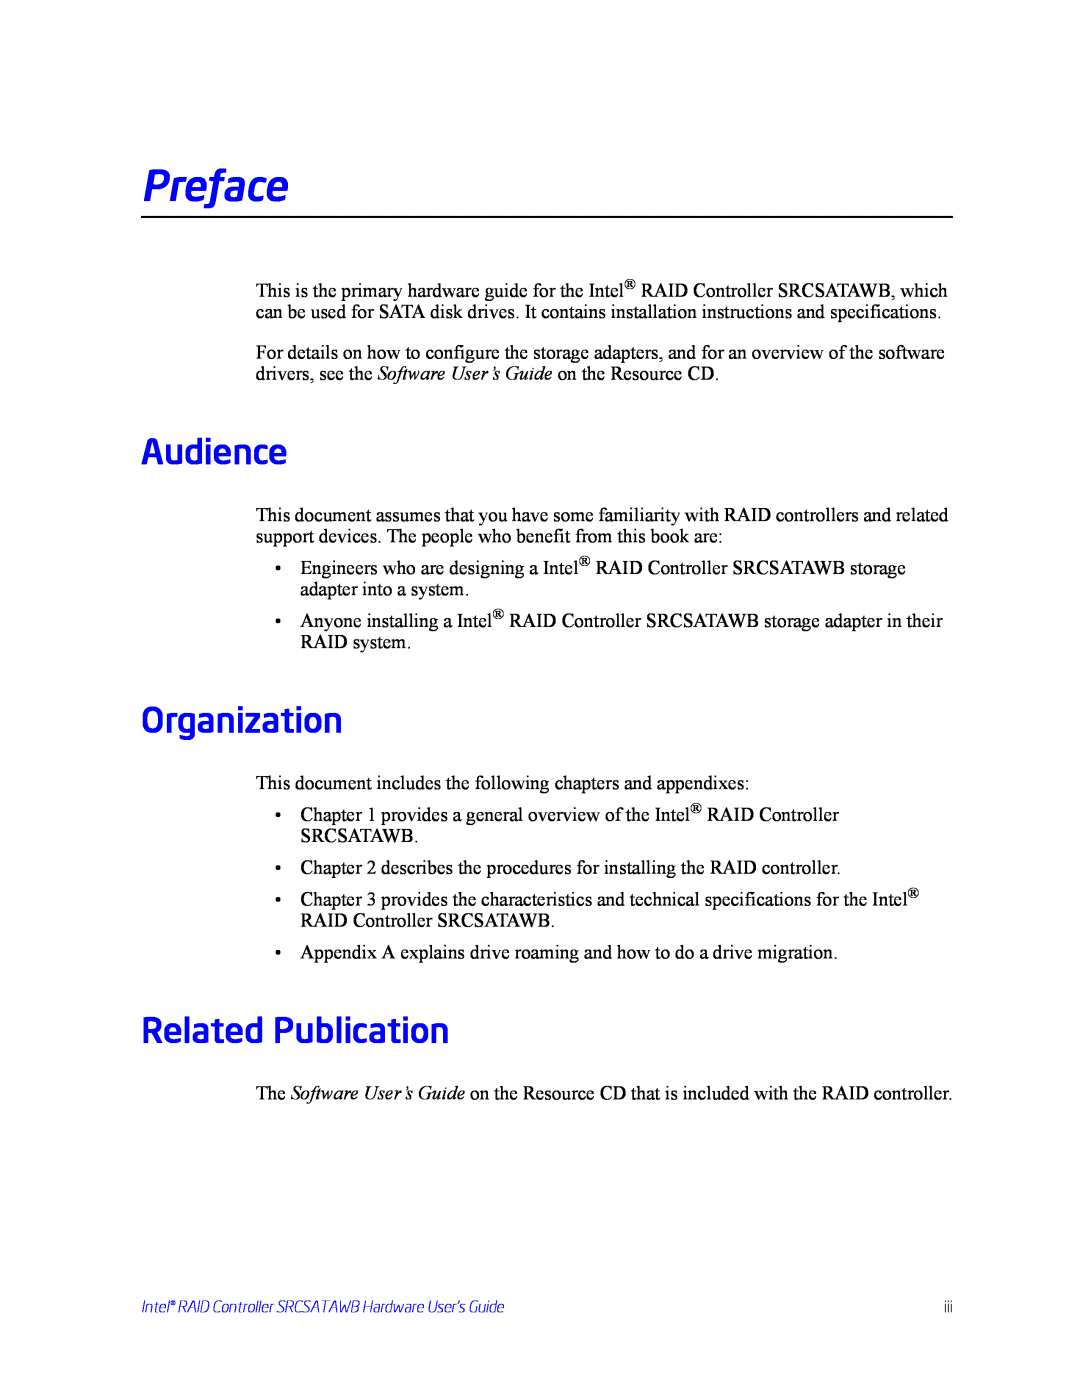 Intel SRCSATAWB manual Audience, Organization, Related Publication, Preface 